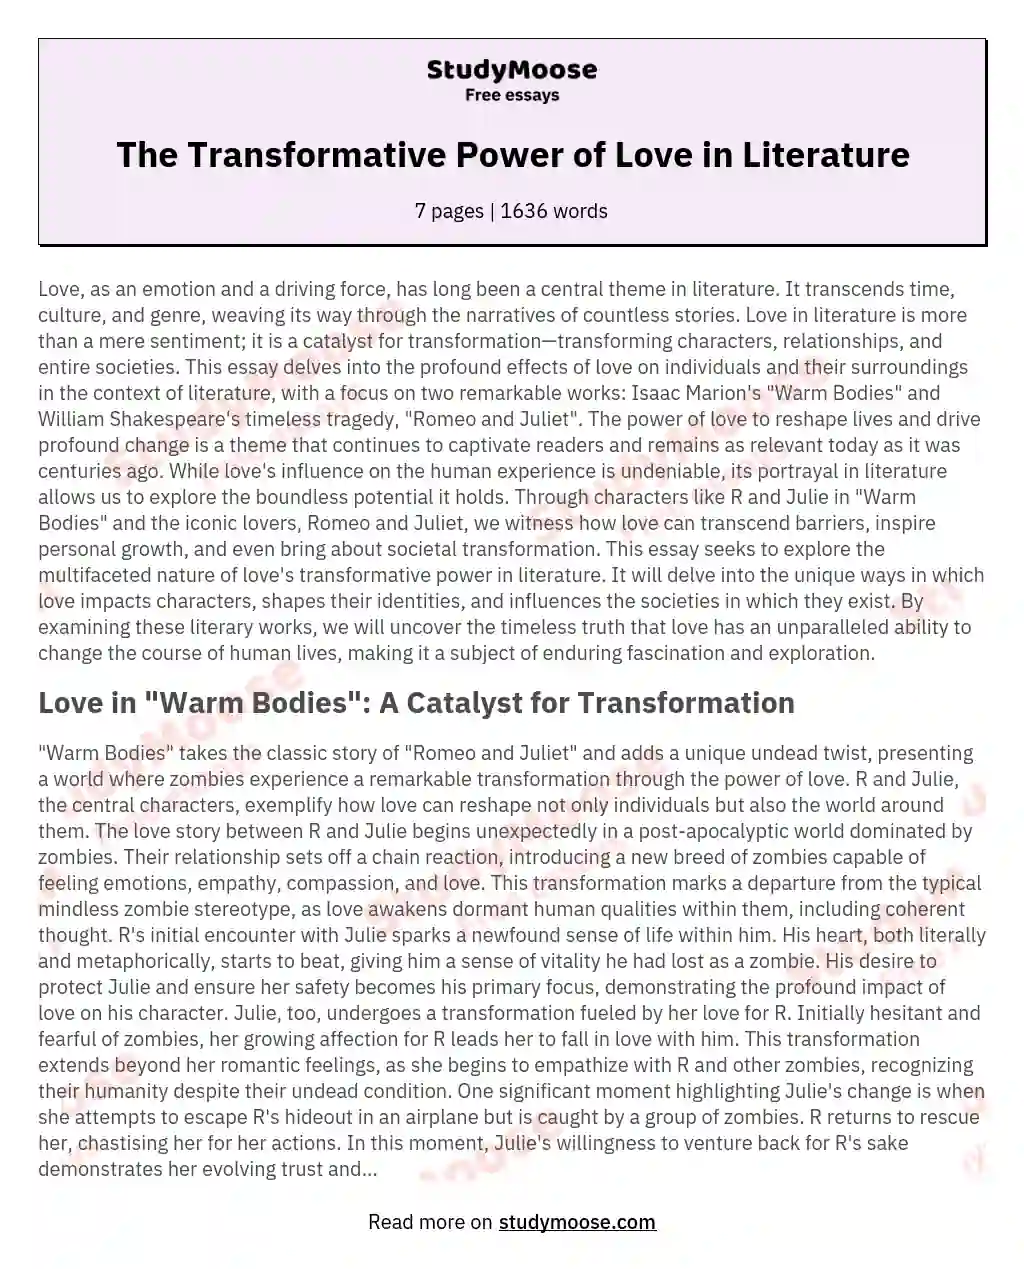 The Transformative Power of Love in Literature essay